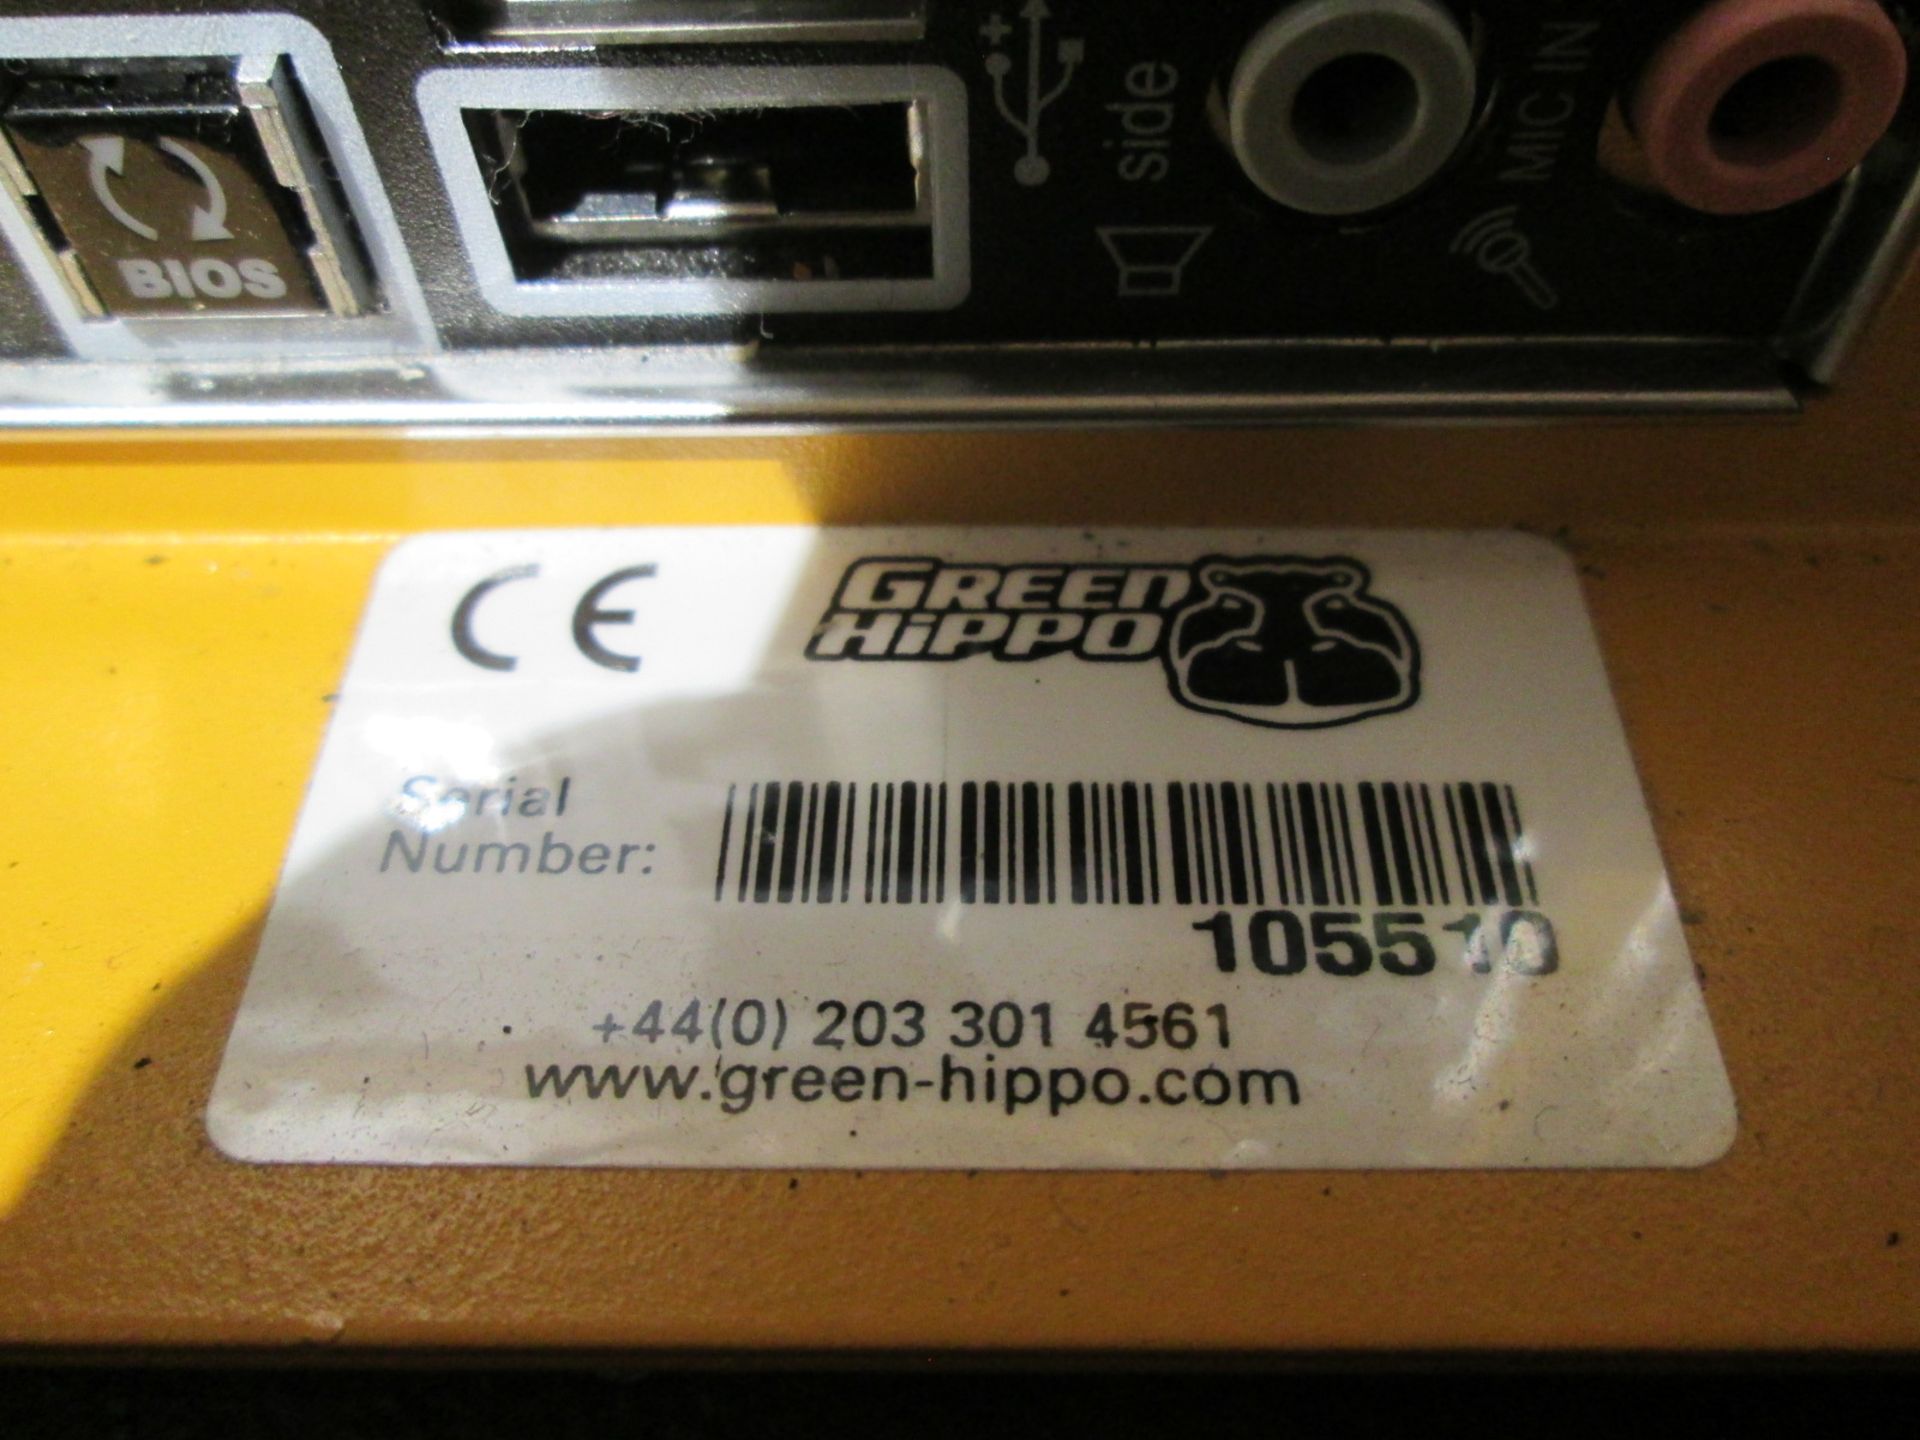 Green Hippo 2 Kan Media Player. S/N 105510. In flight case - Image 7 of 8